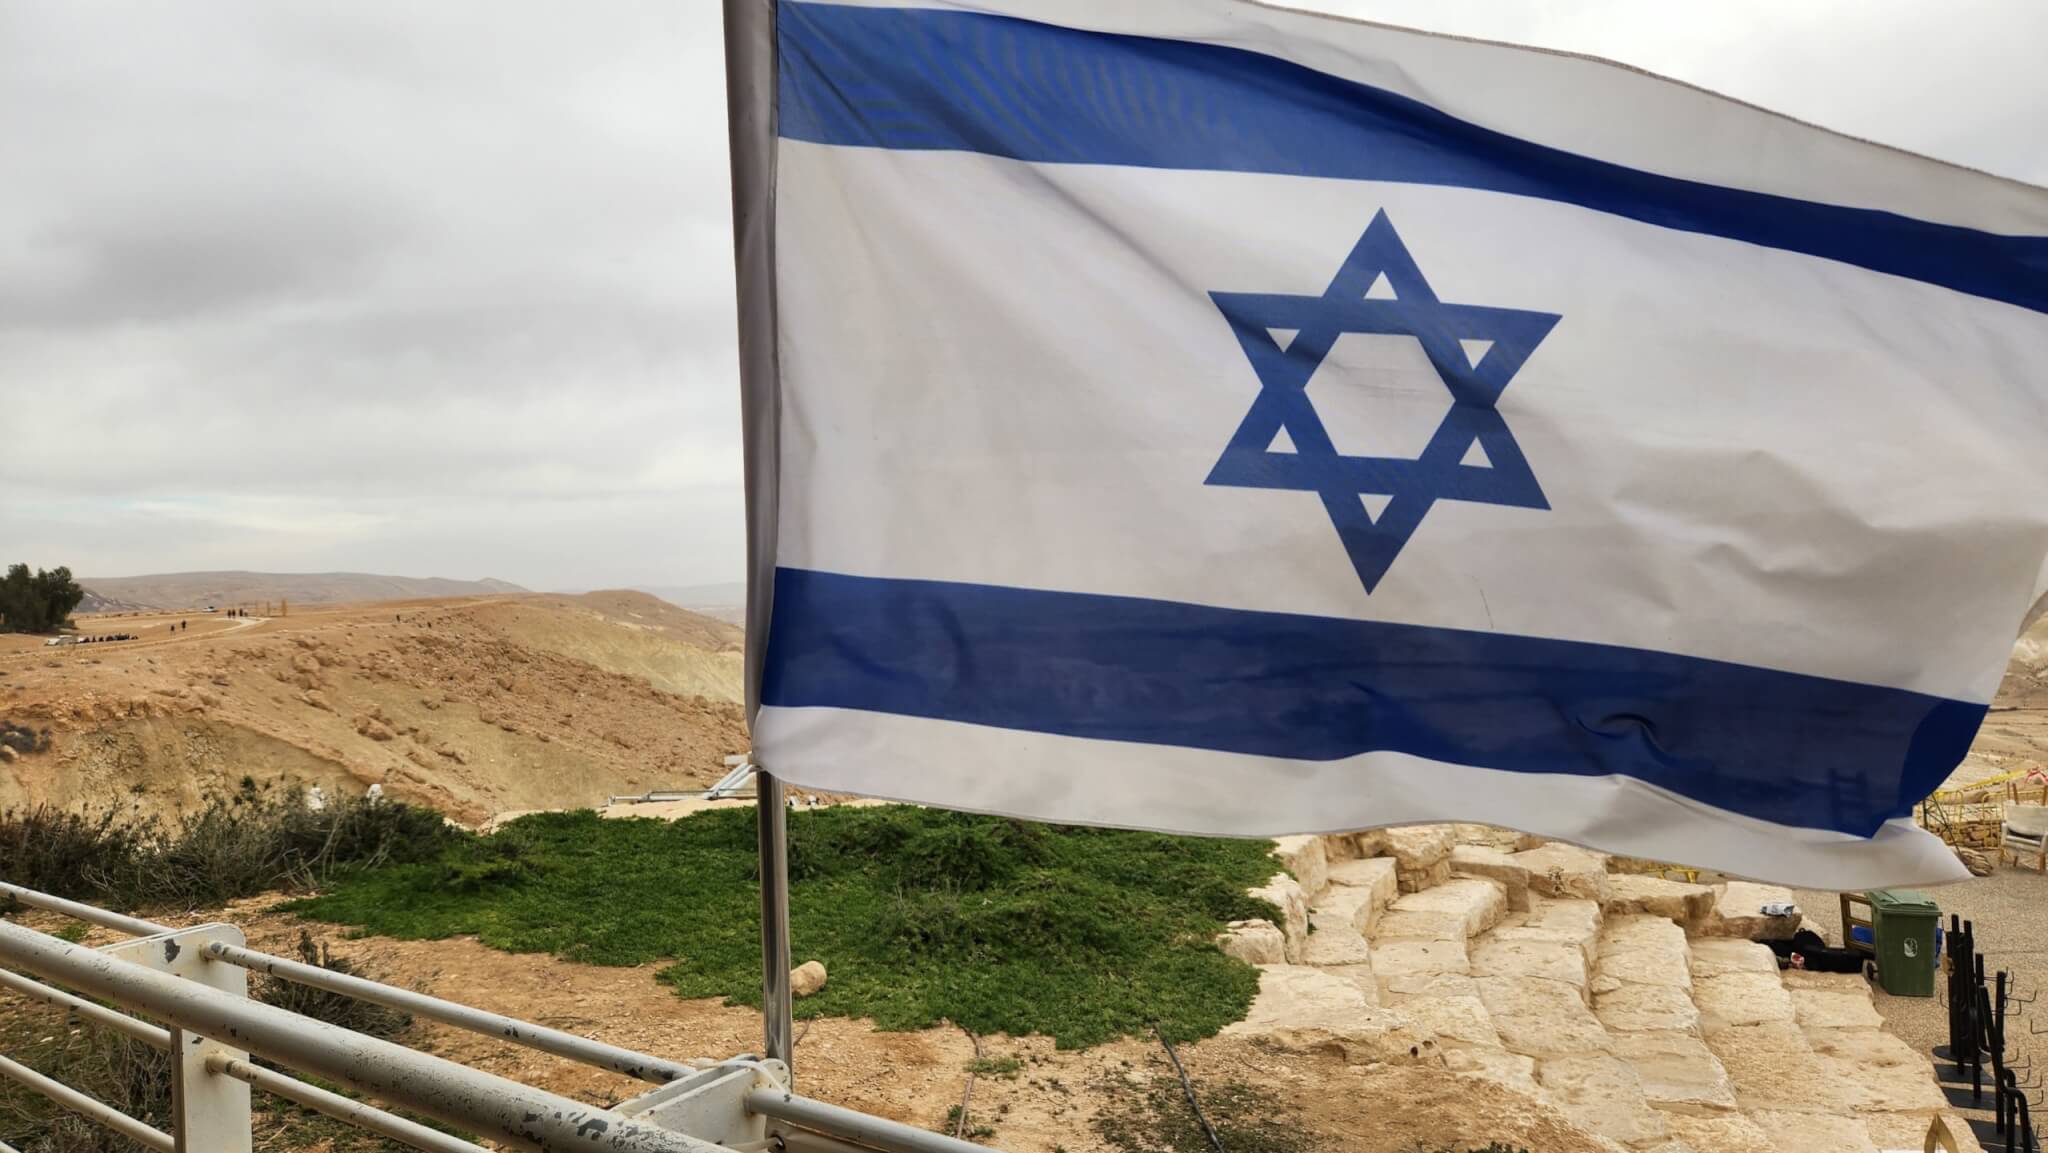 Israel Flag on YAD Ramat HaNegev exchange